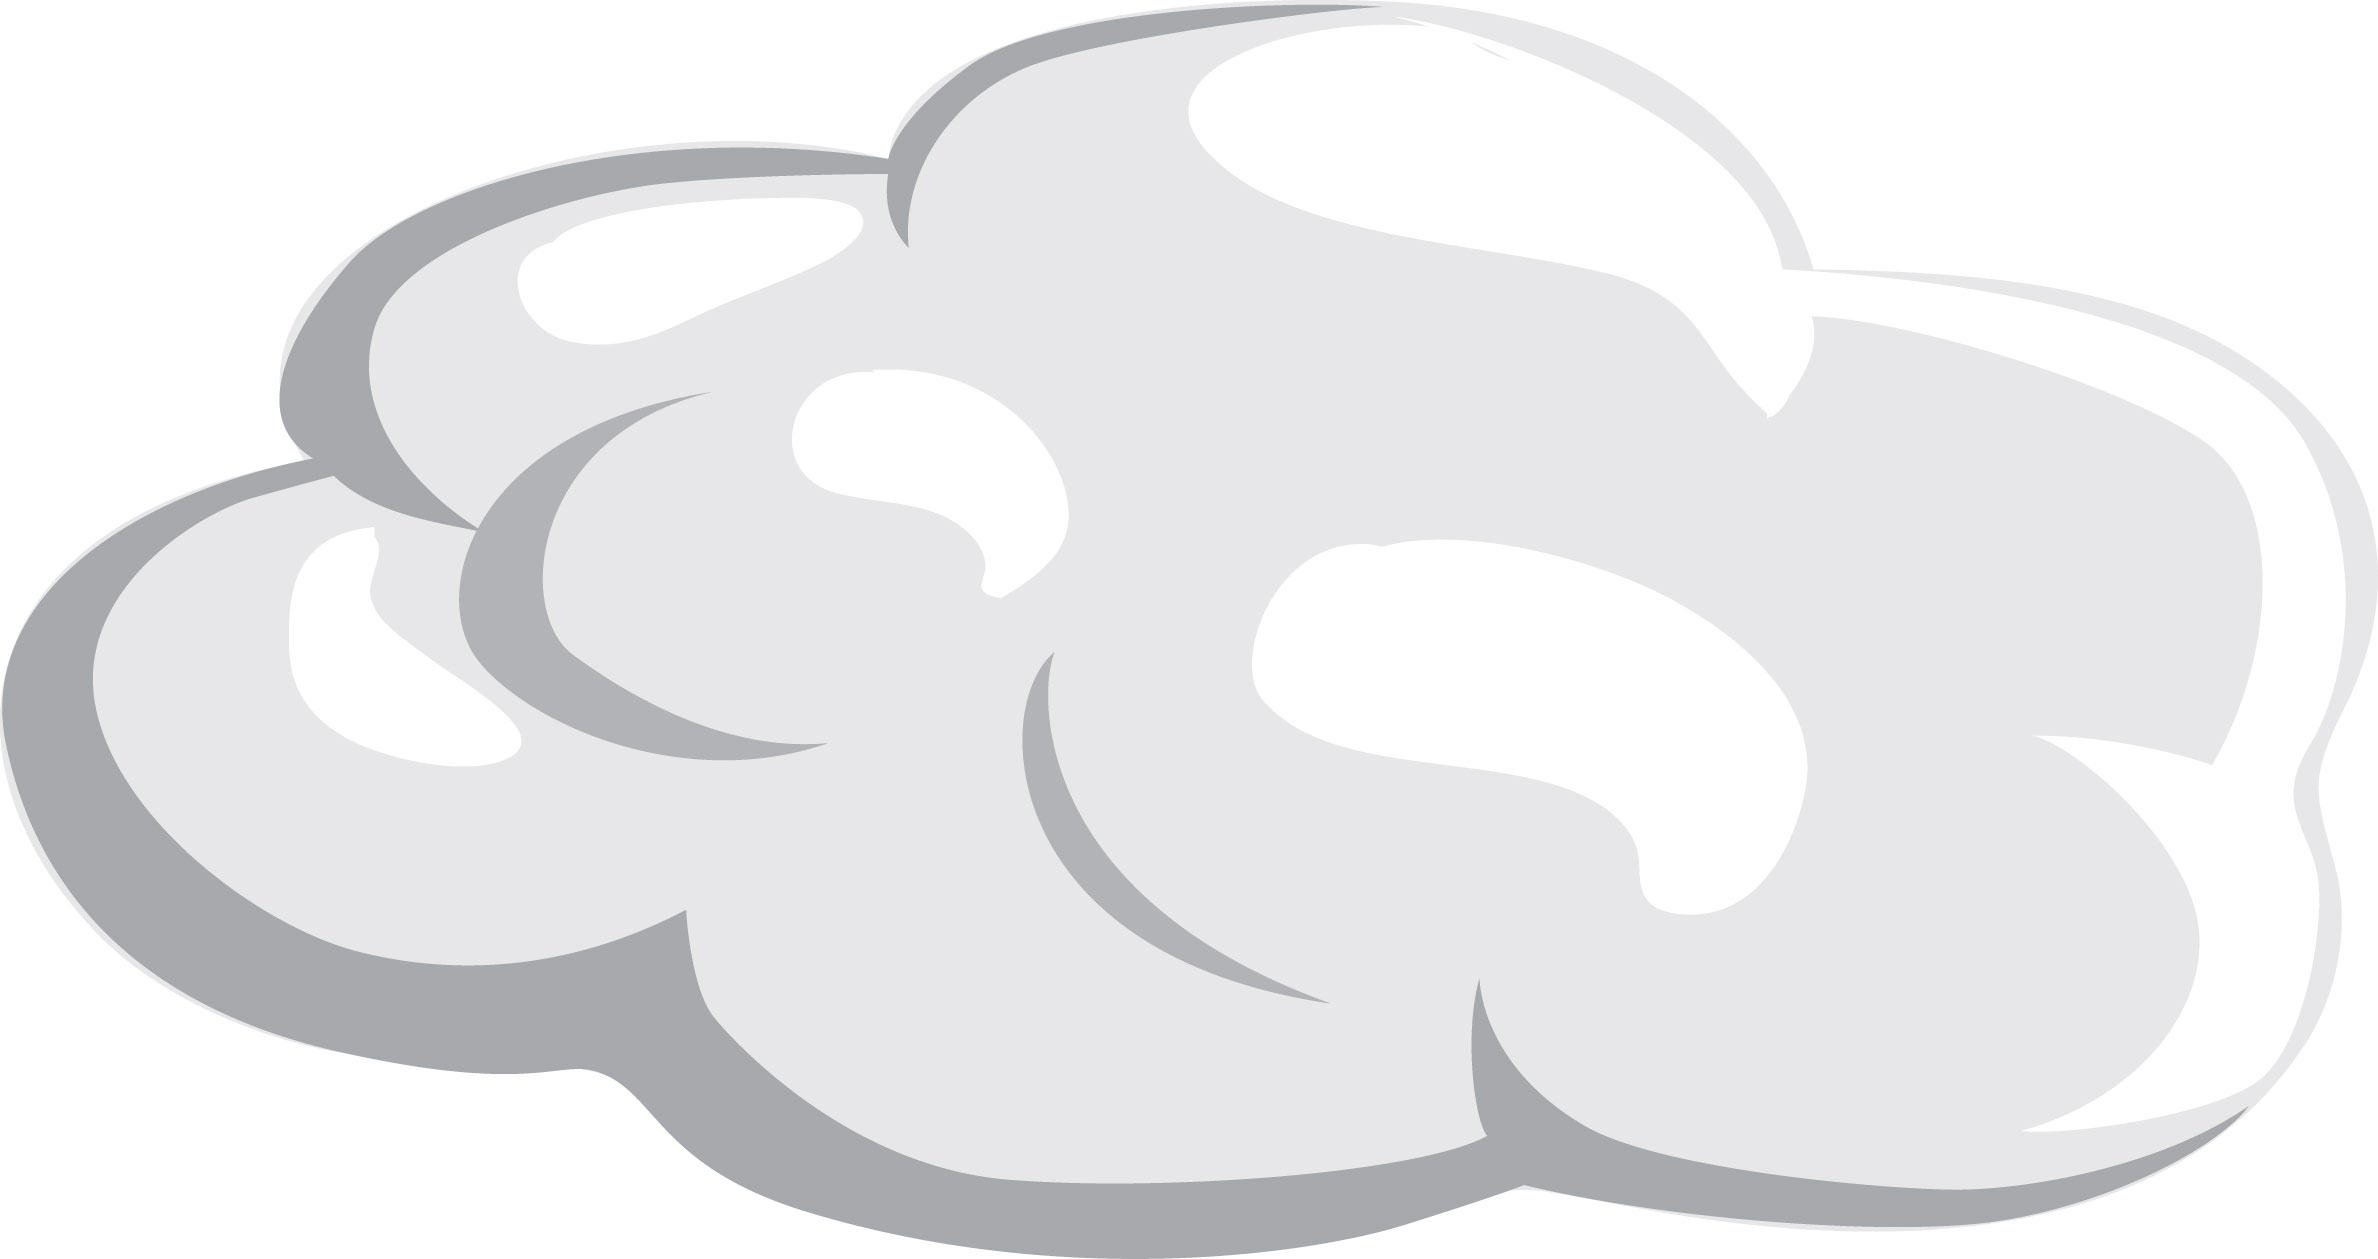 Cloud clipart free clip art of clouds 7 clipartwork